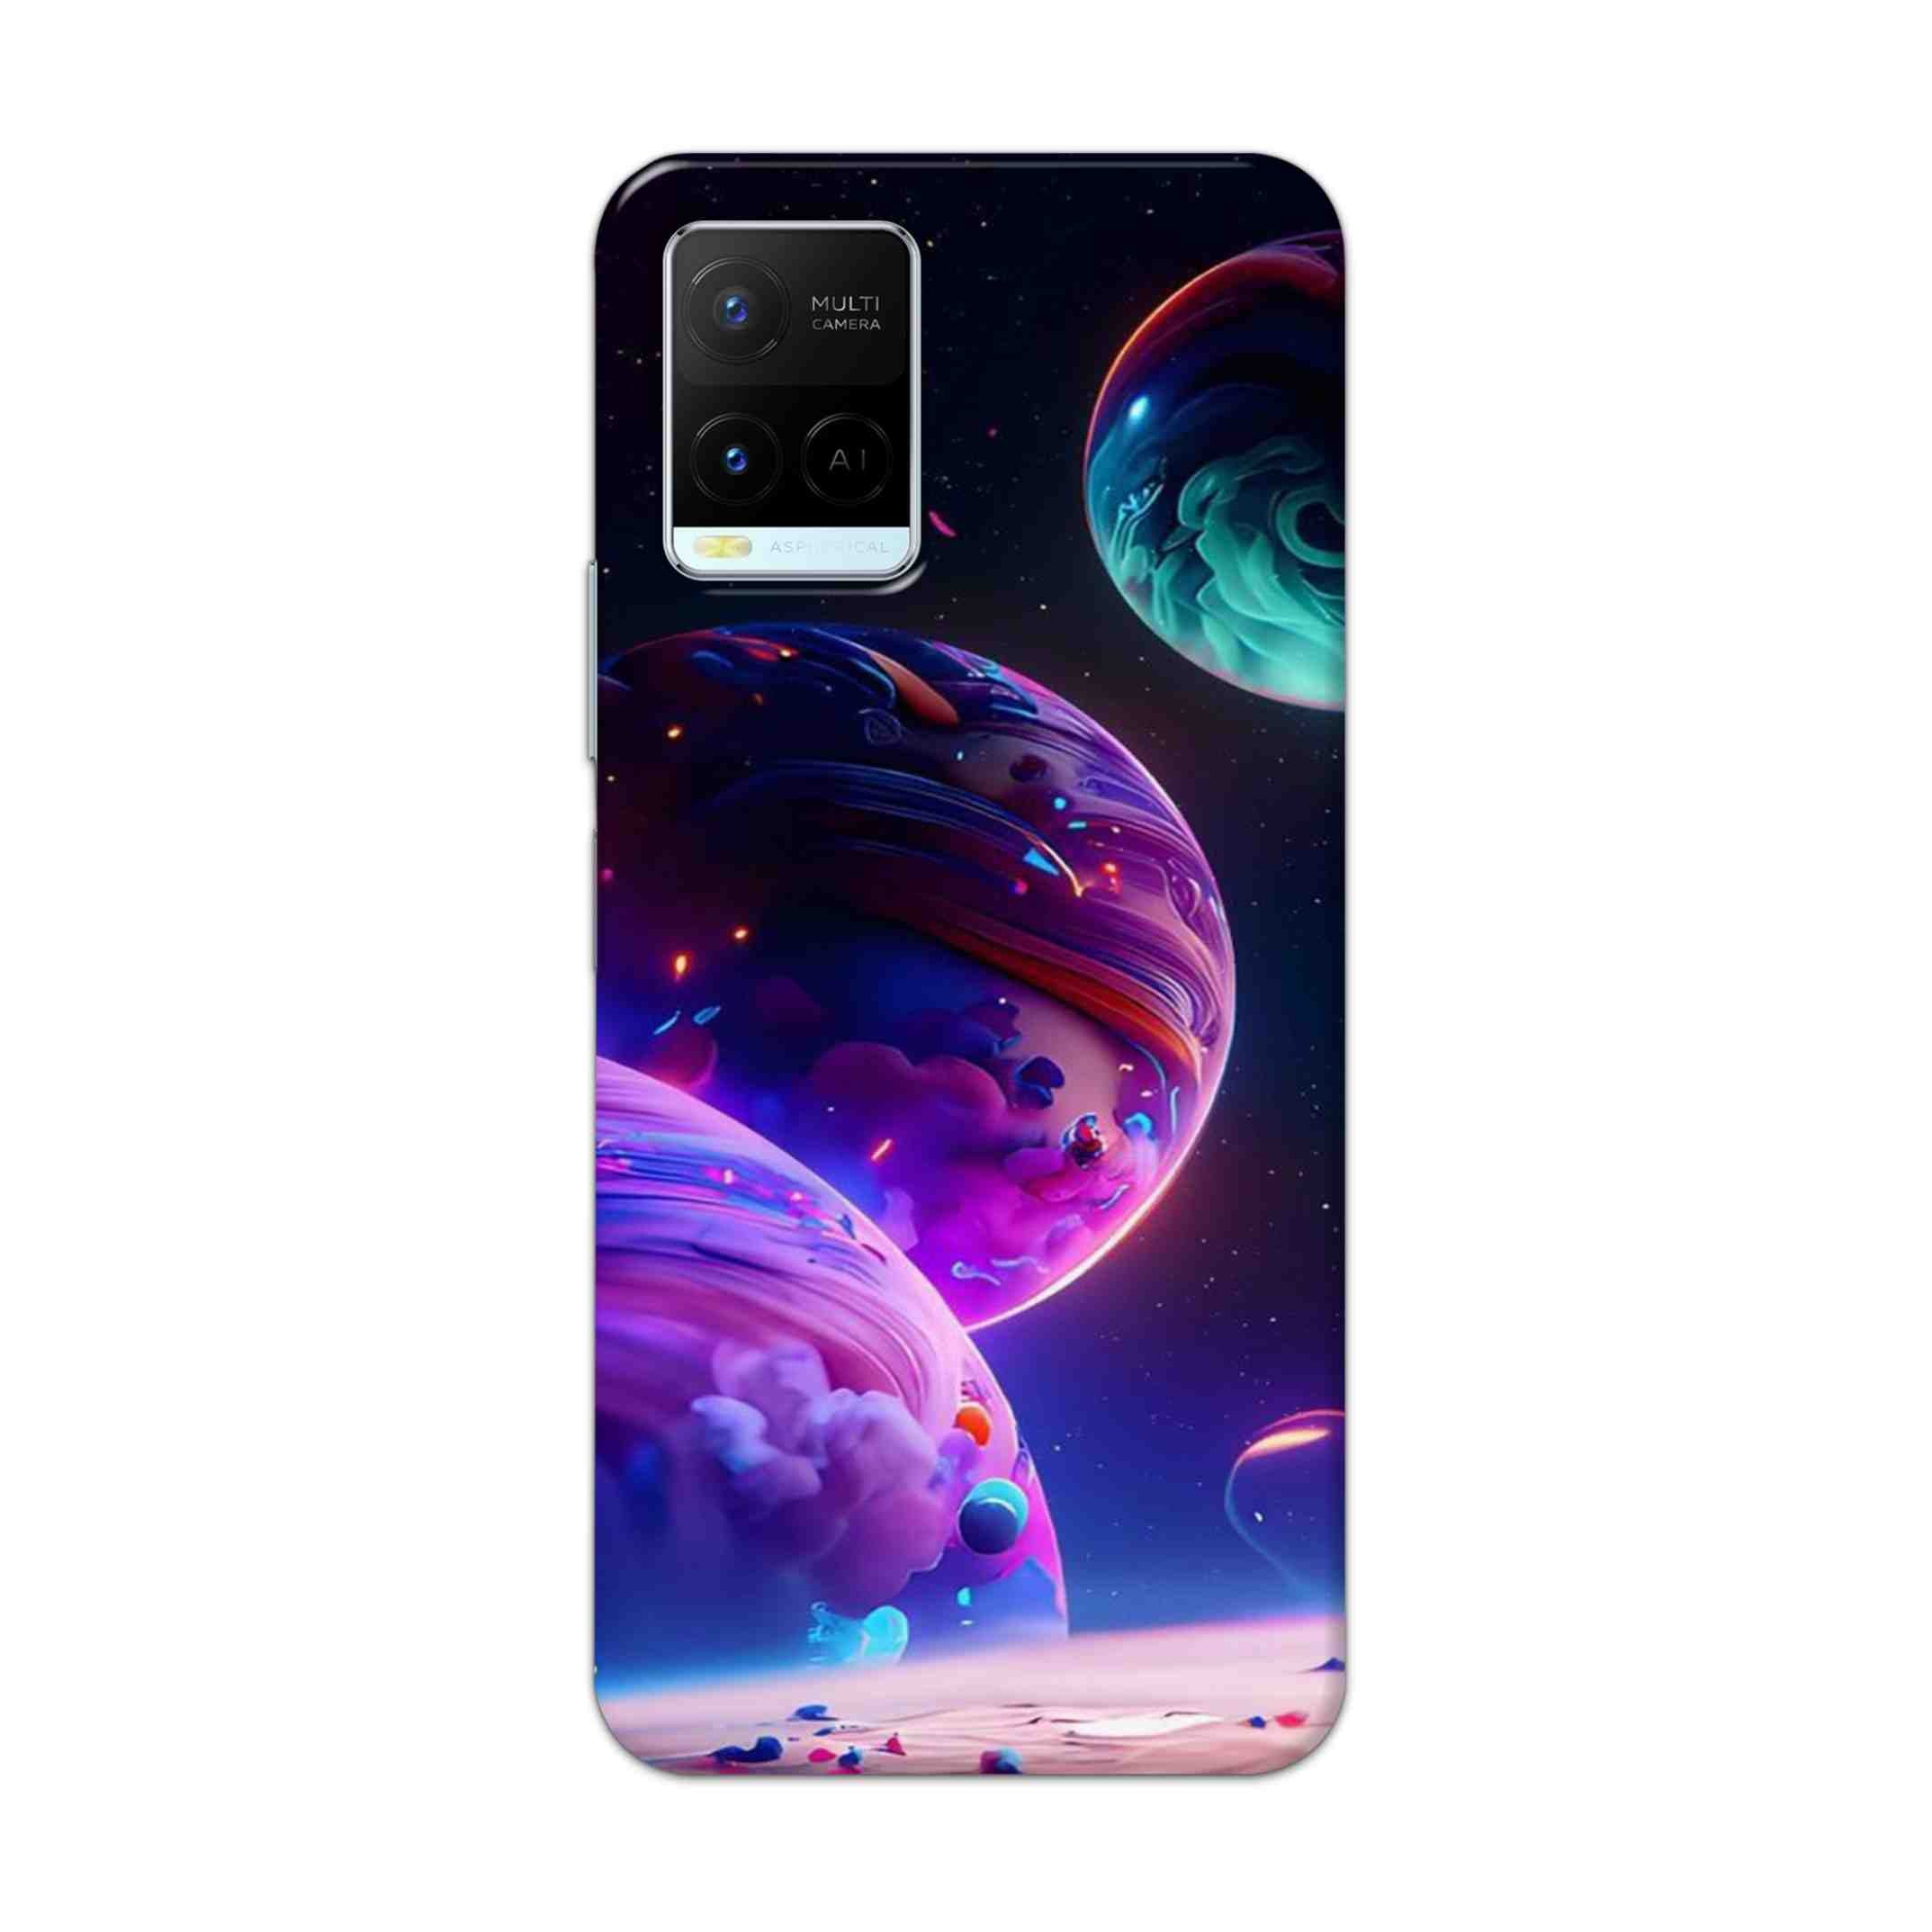 Buy 3 Earth Hard Back Mobile Phone Case Cover For Vivo Y21 2021 Online